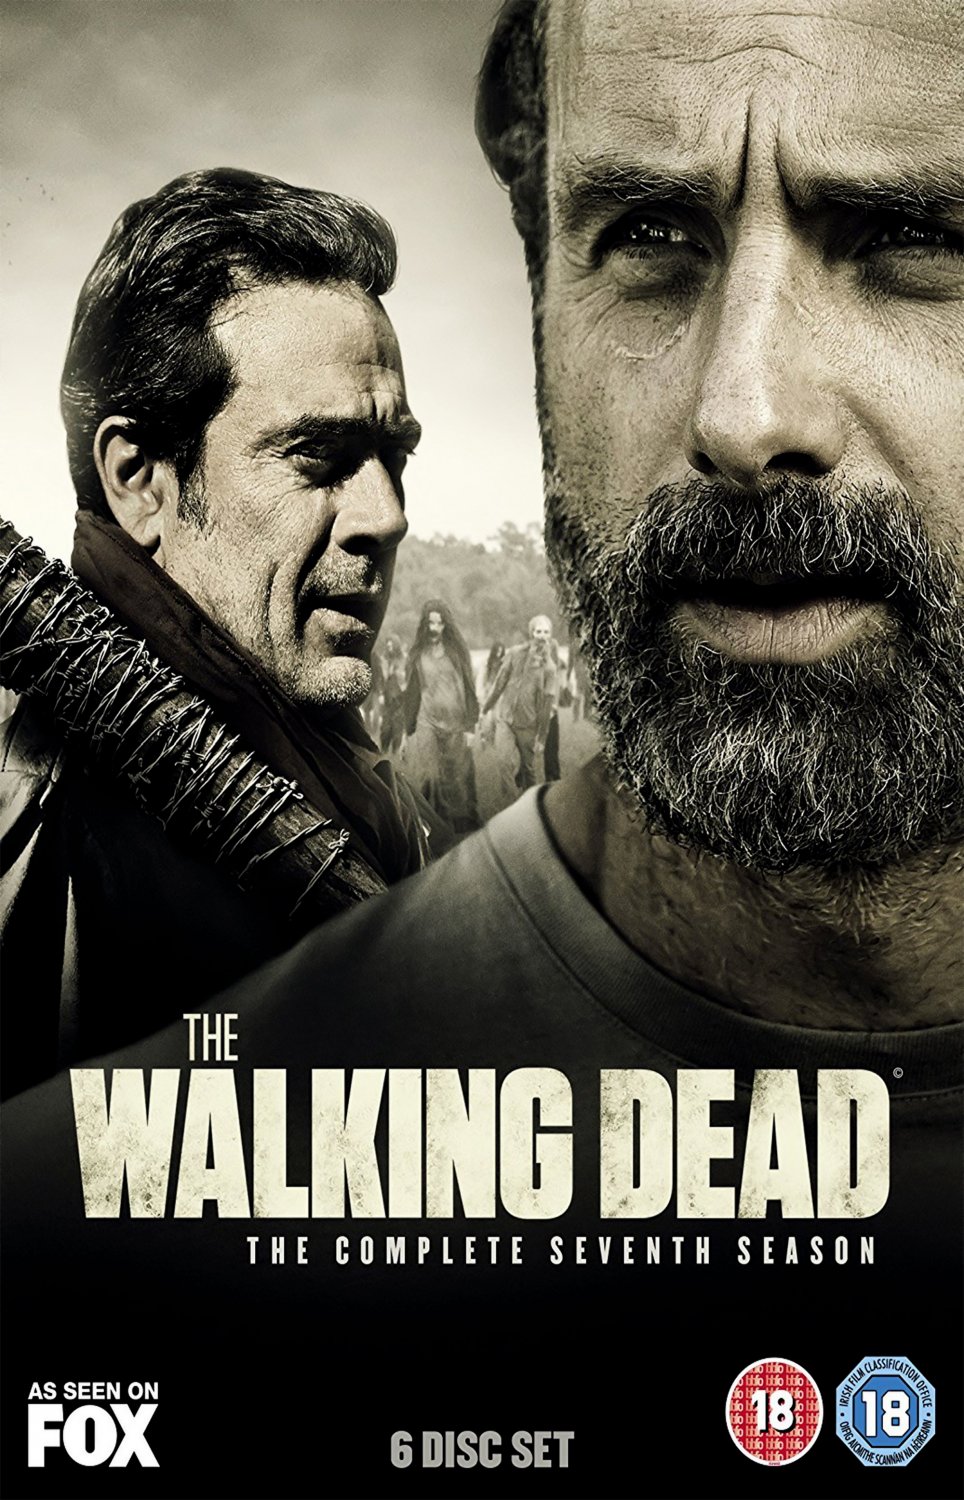 The Walking Dead Season 7  13"x19" (32cm/49cm) Poster